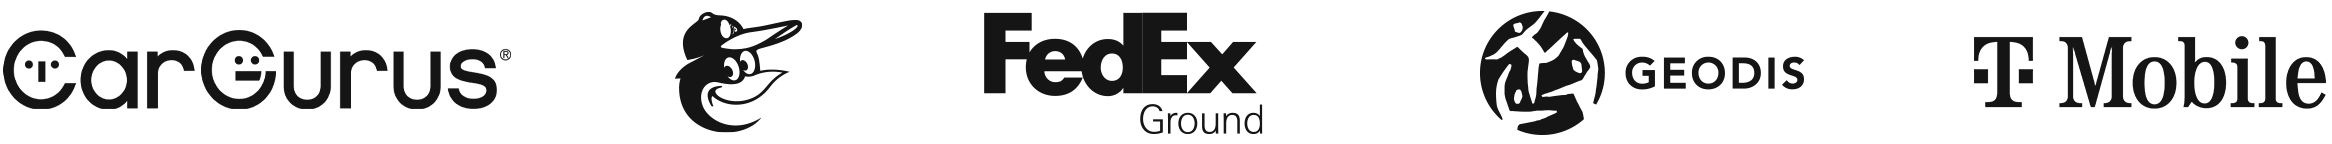 Partner logos: CarGurus, Baltimore Orioles, FedEx Ground, GEODIS, and T-Mobile